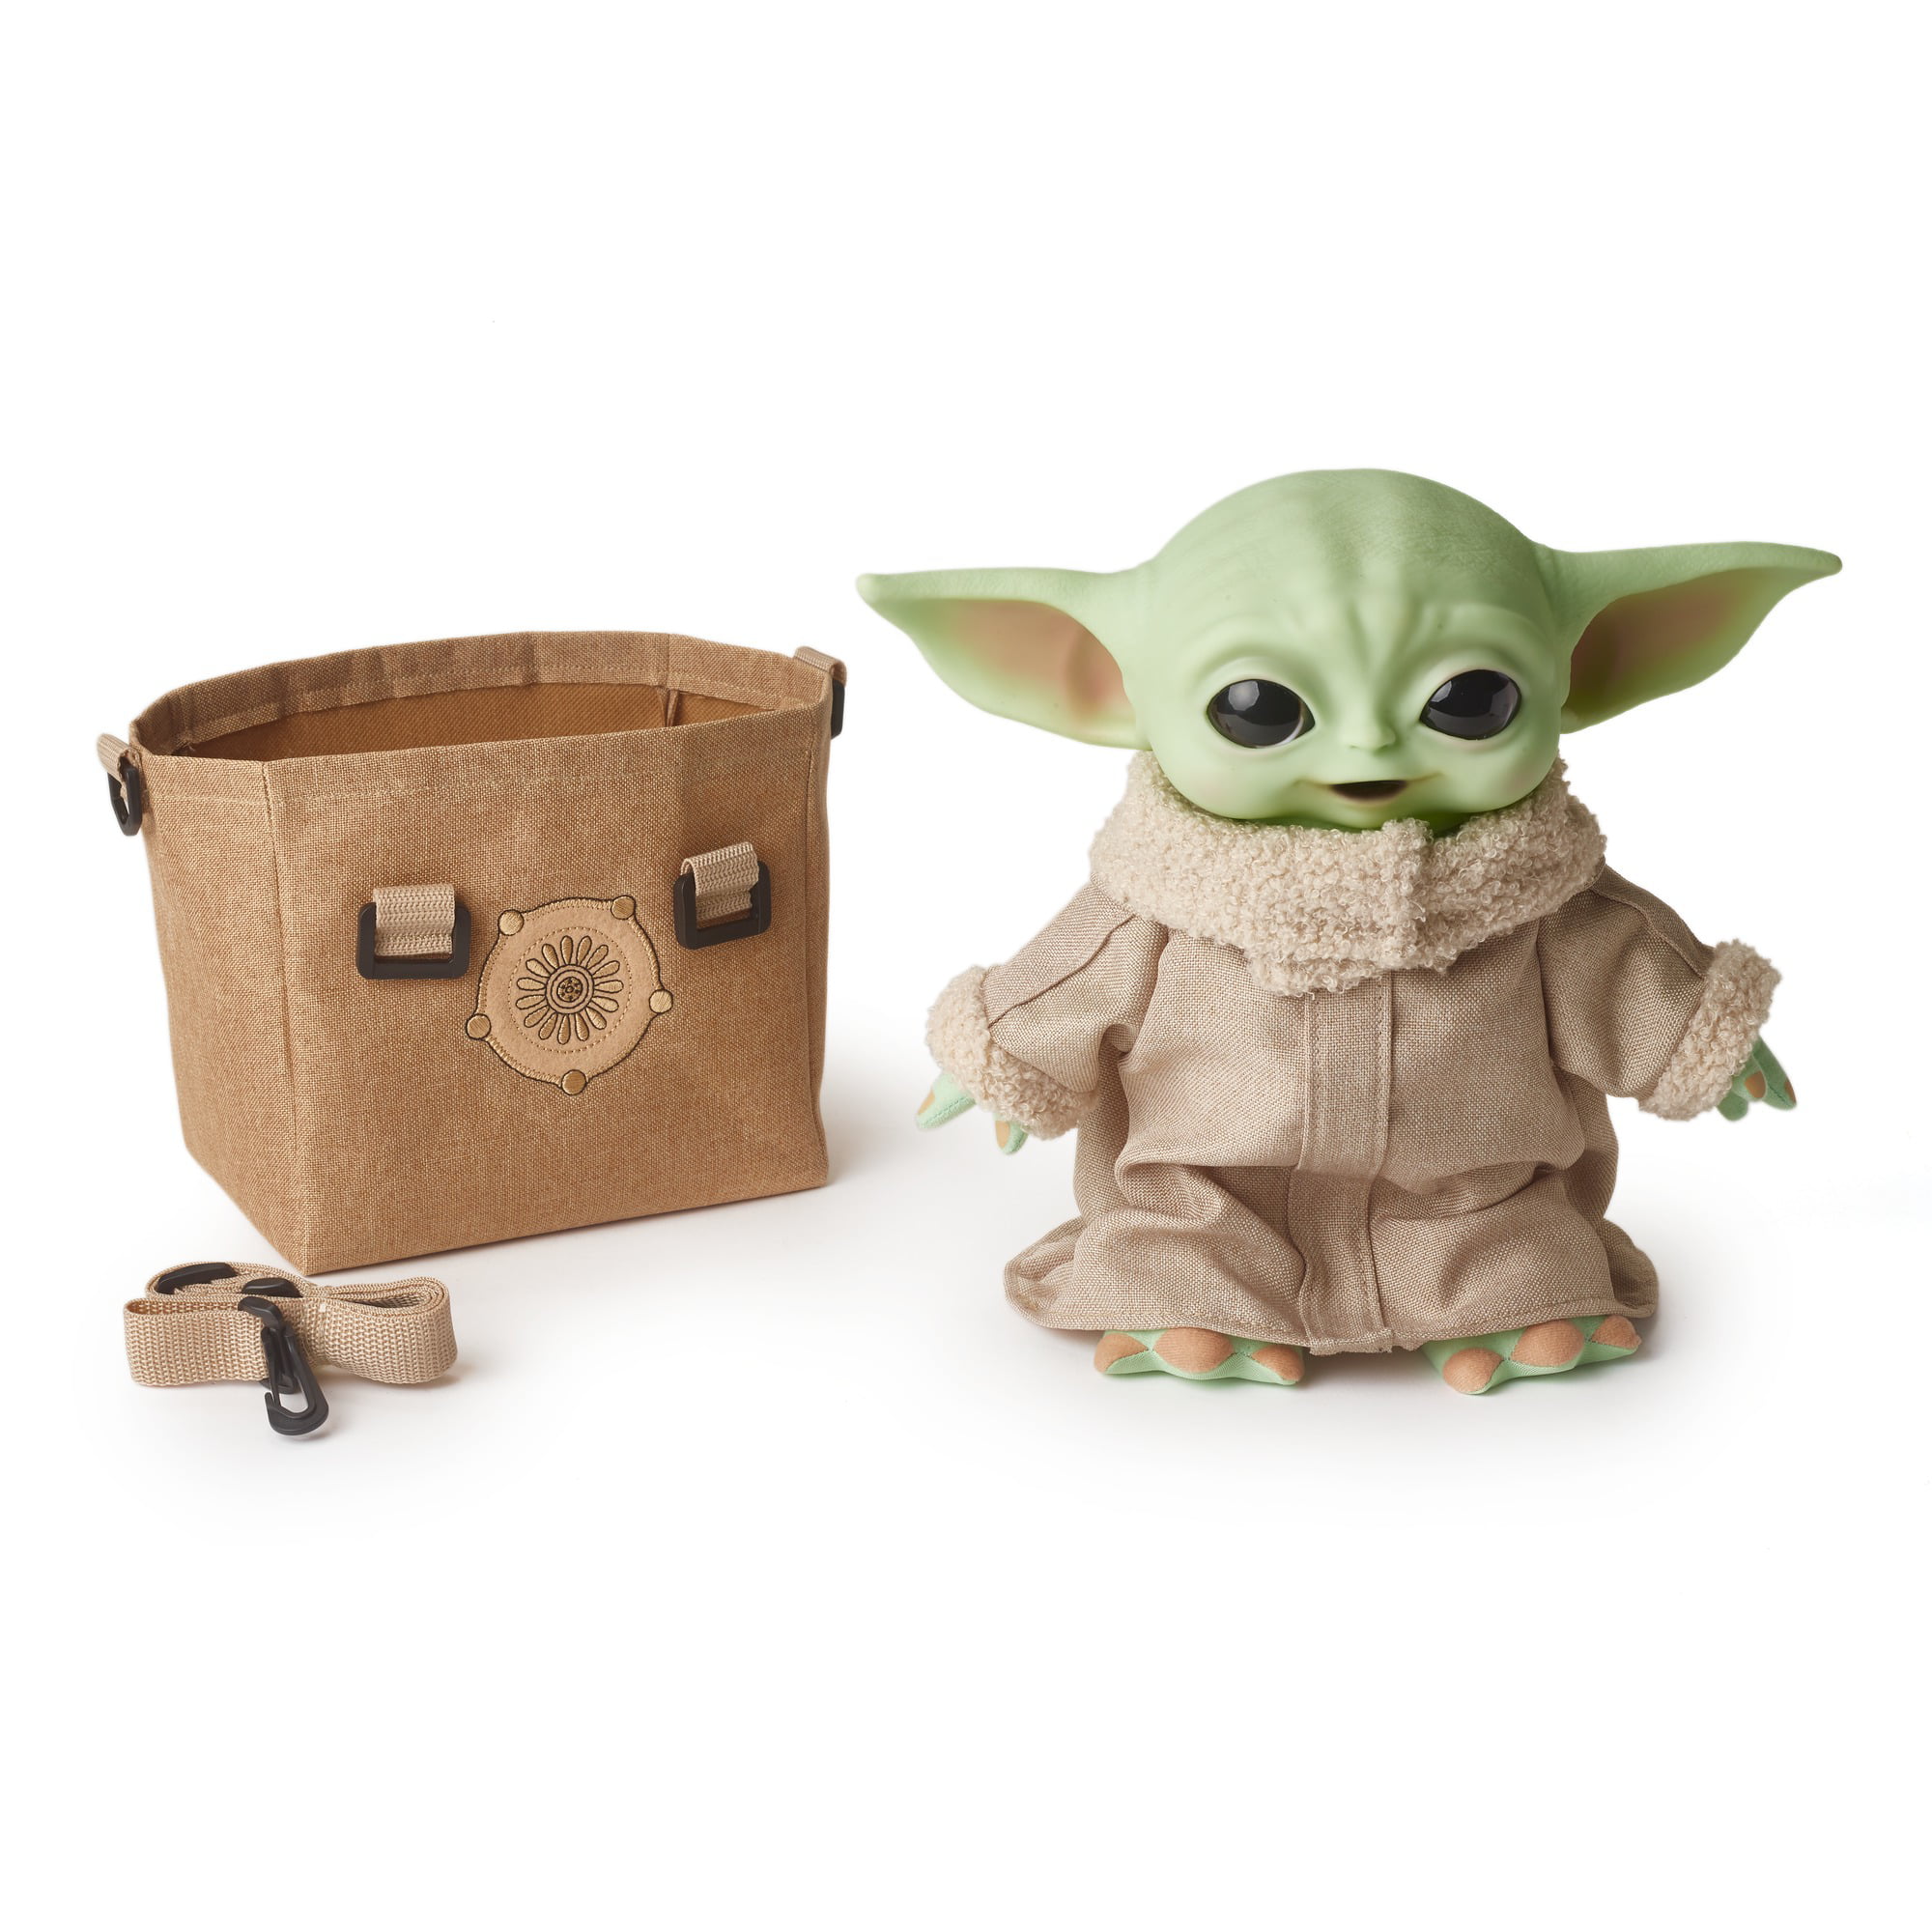 Mandalorian Toy Star Wars Mandalorian The Child "Baby Yoda" Talking Plush Toy 